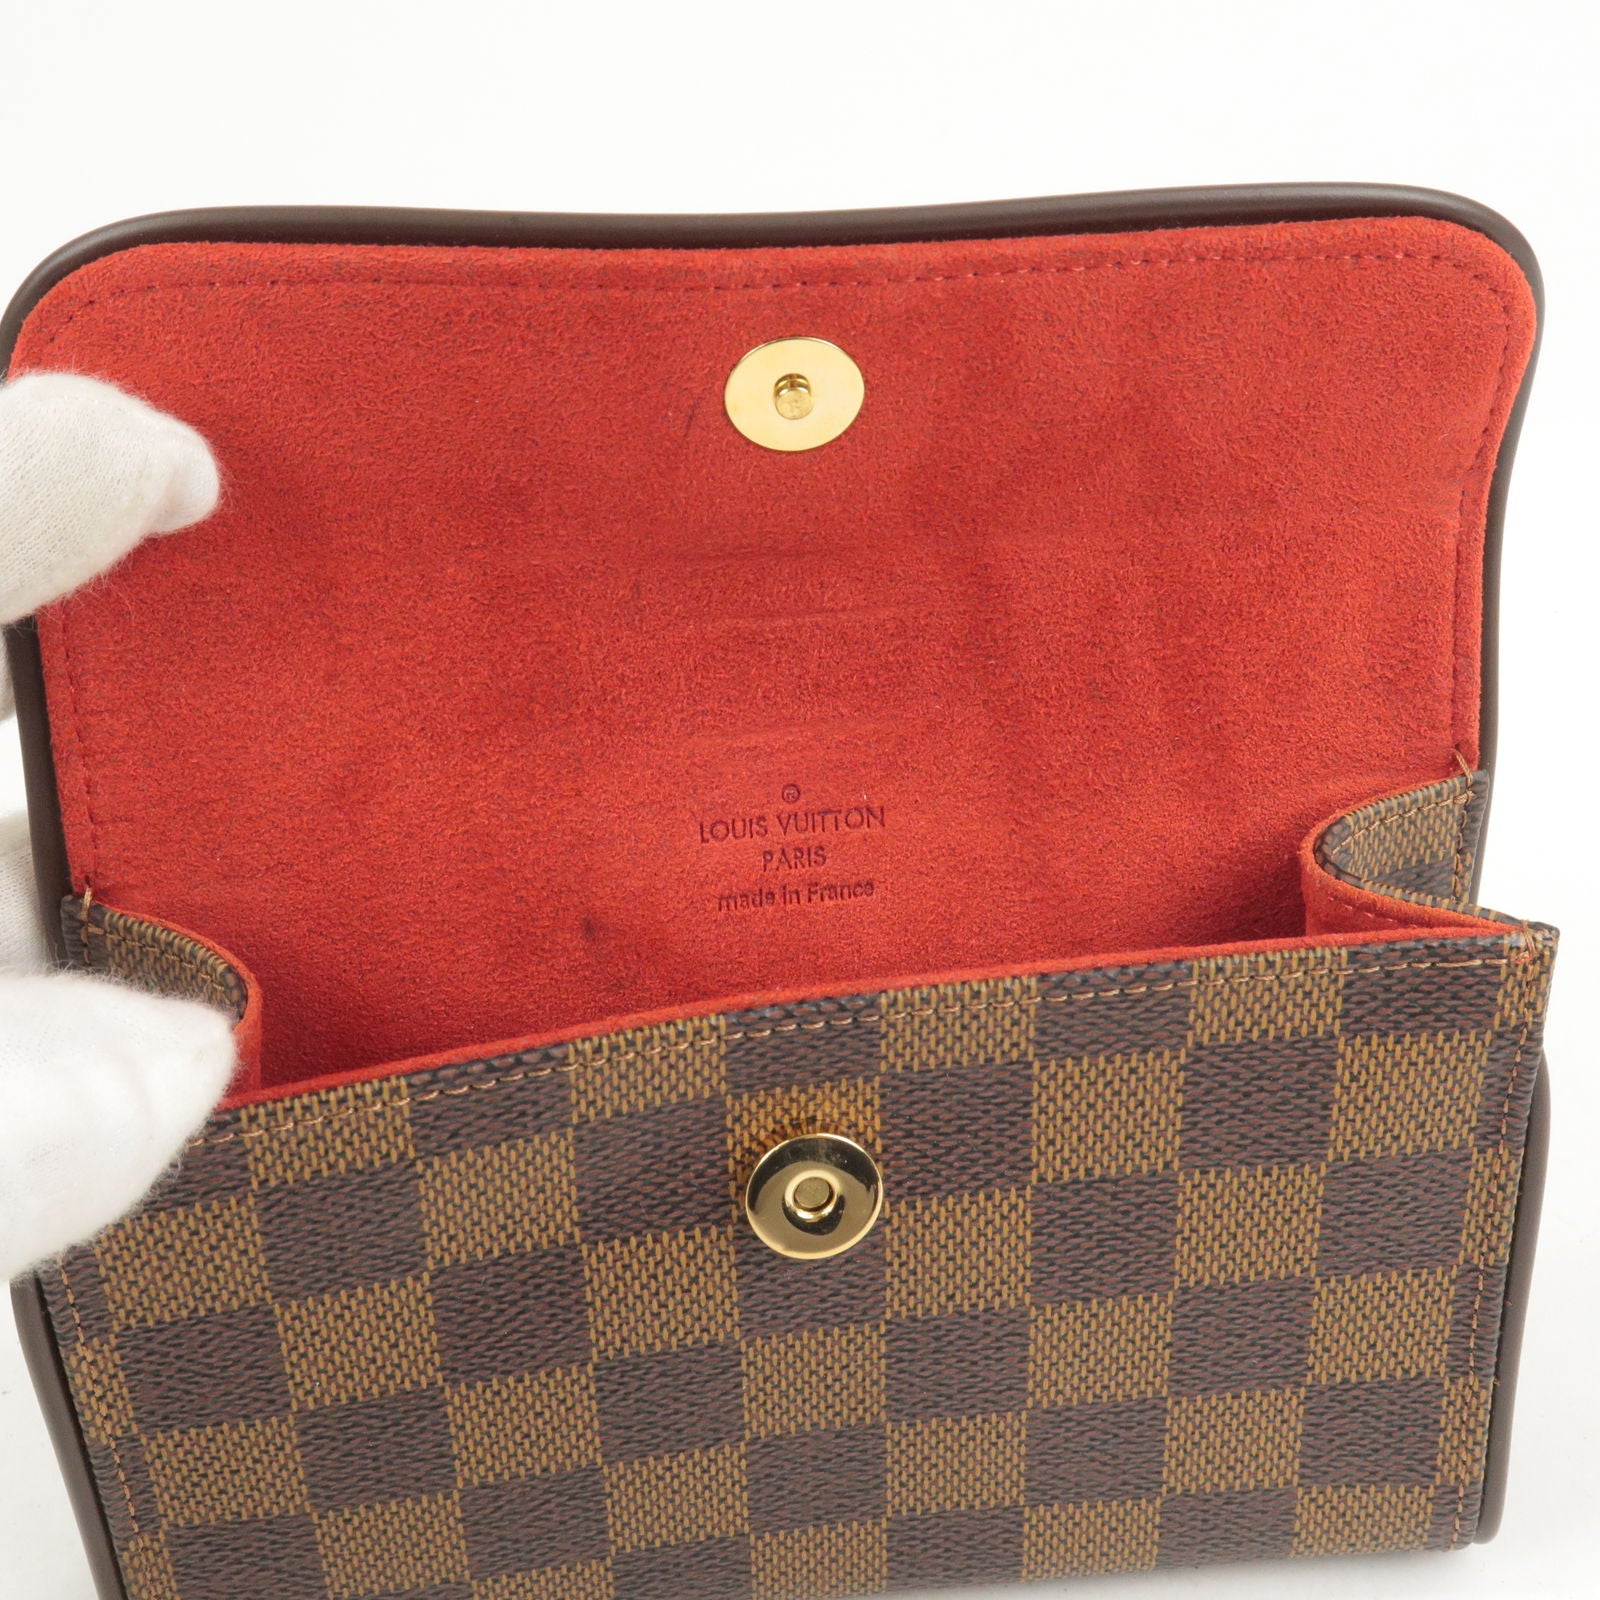 N51856 – dct - Bag - Louis - Size - Vuitton - louis vuitton